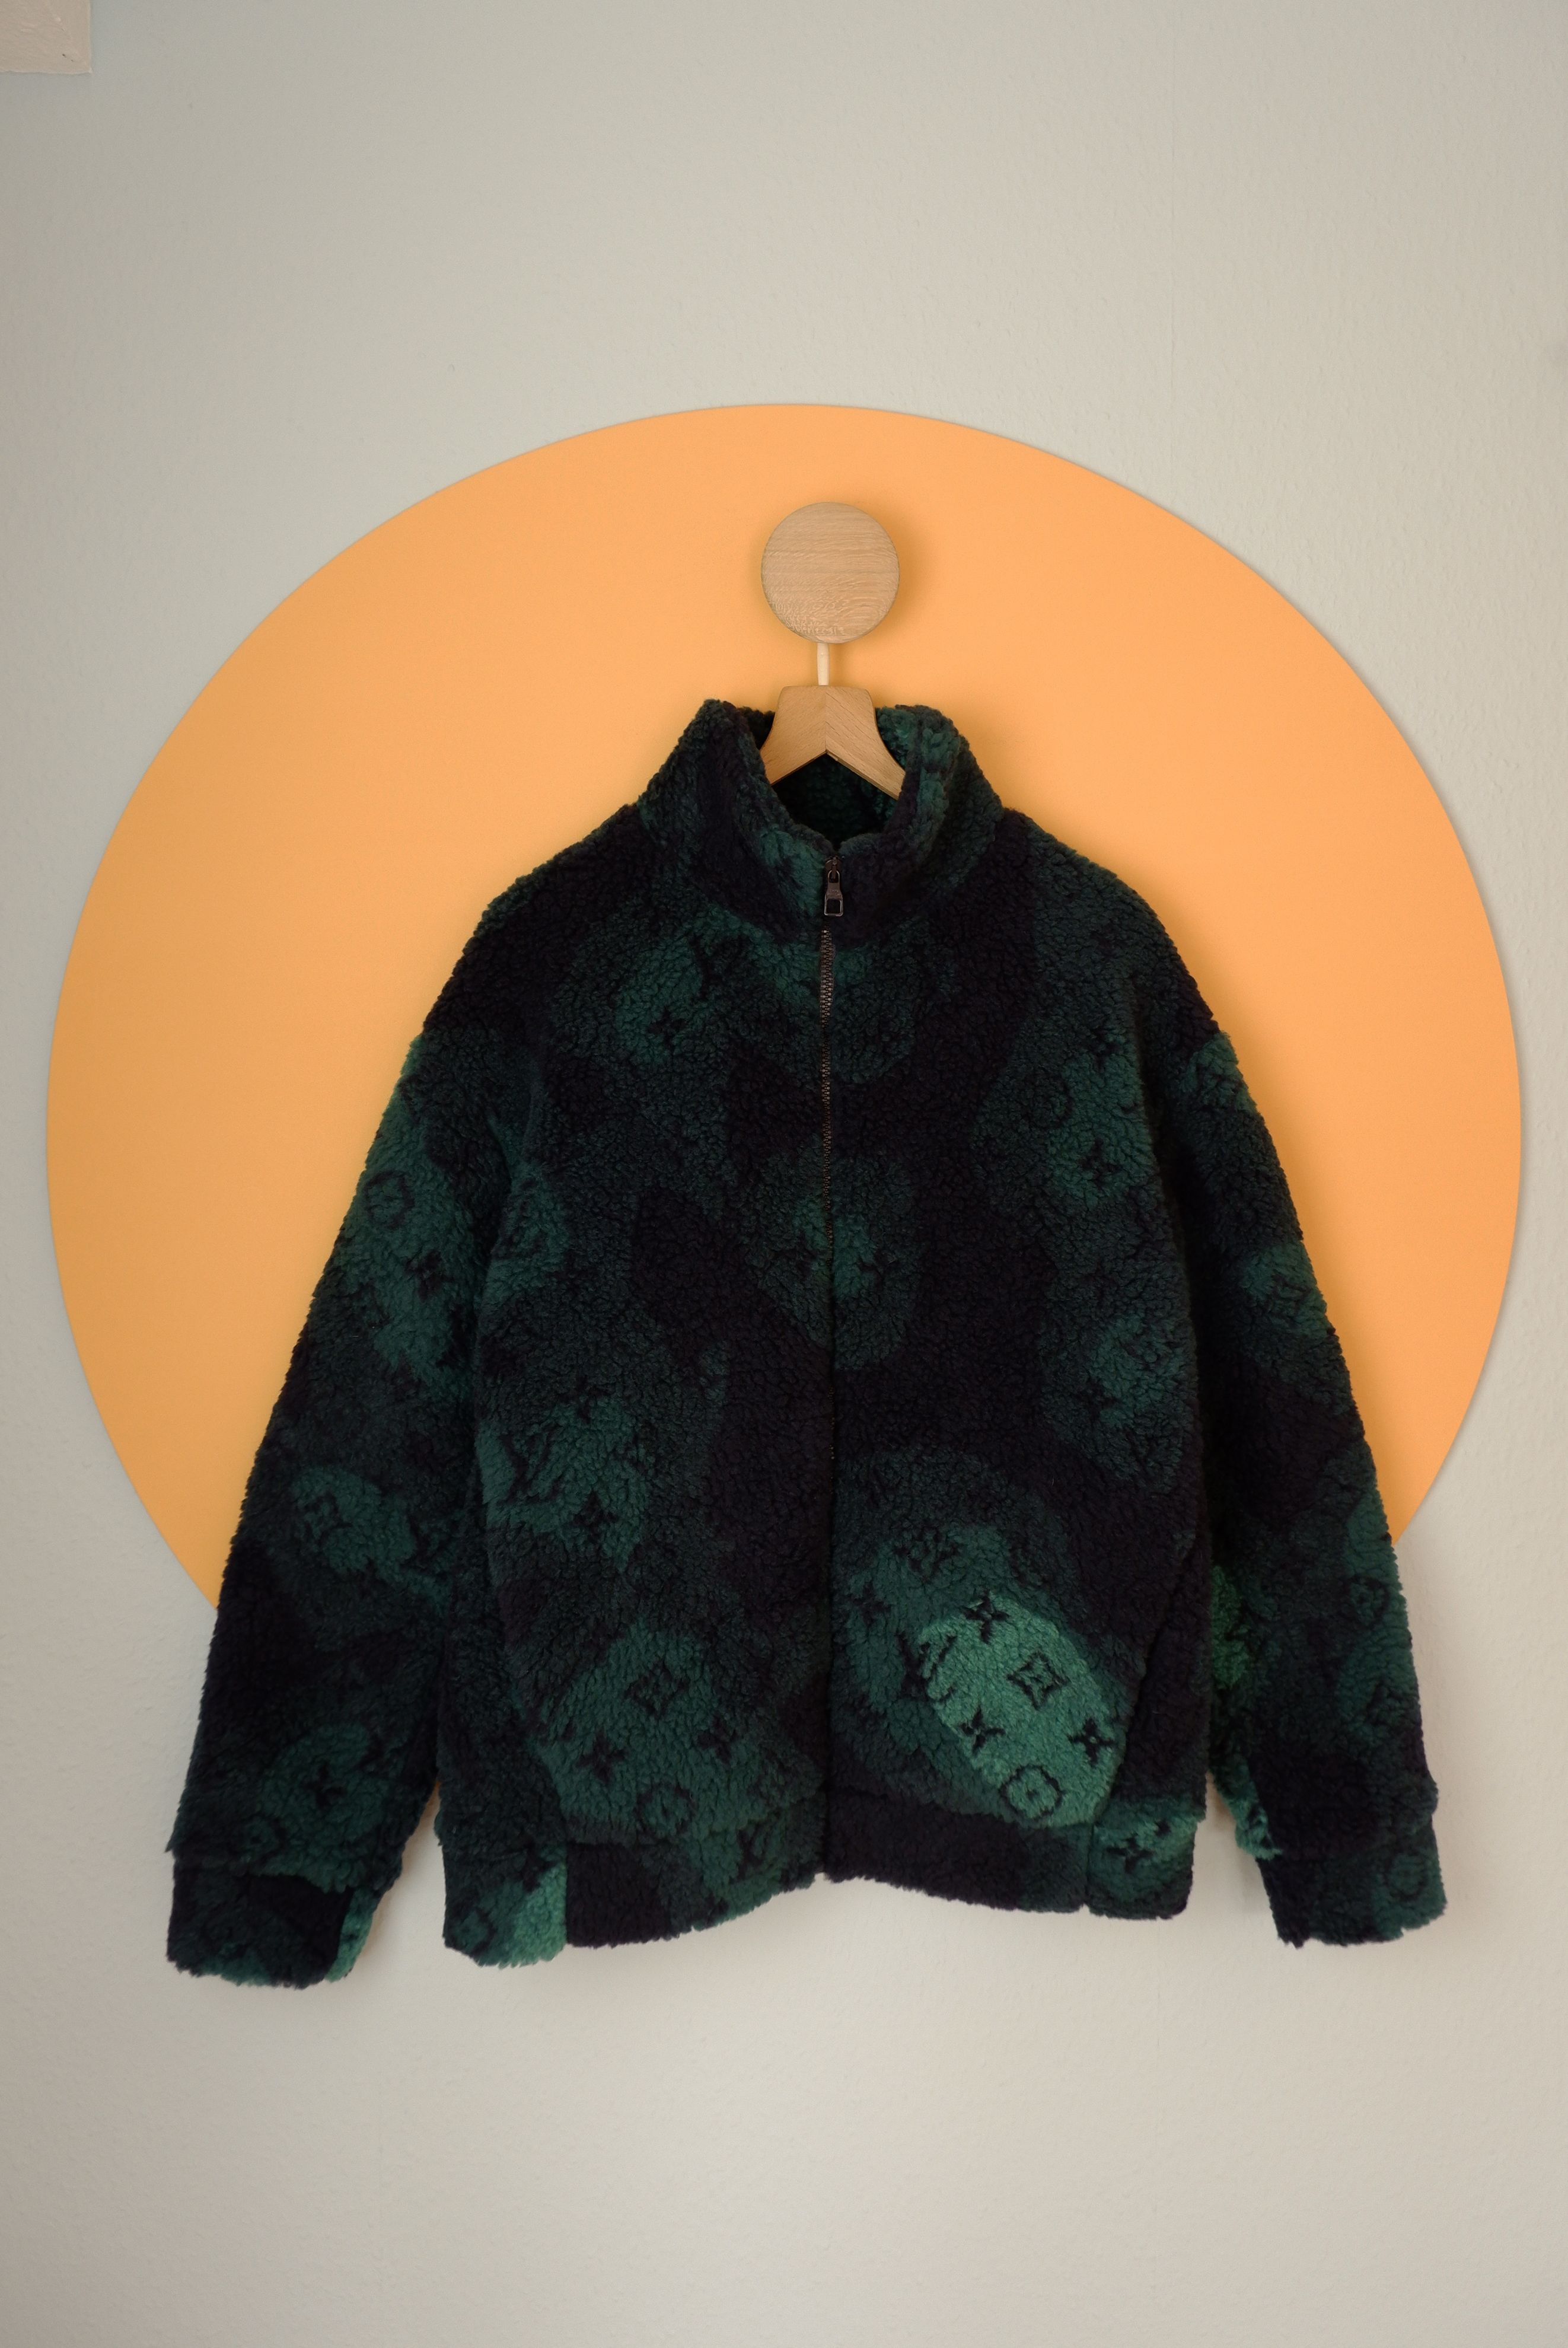 Louis Vuitton Navy & Green Elevation Camo Fleece Jacket worn by